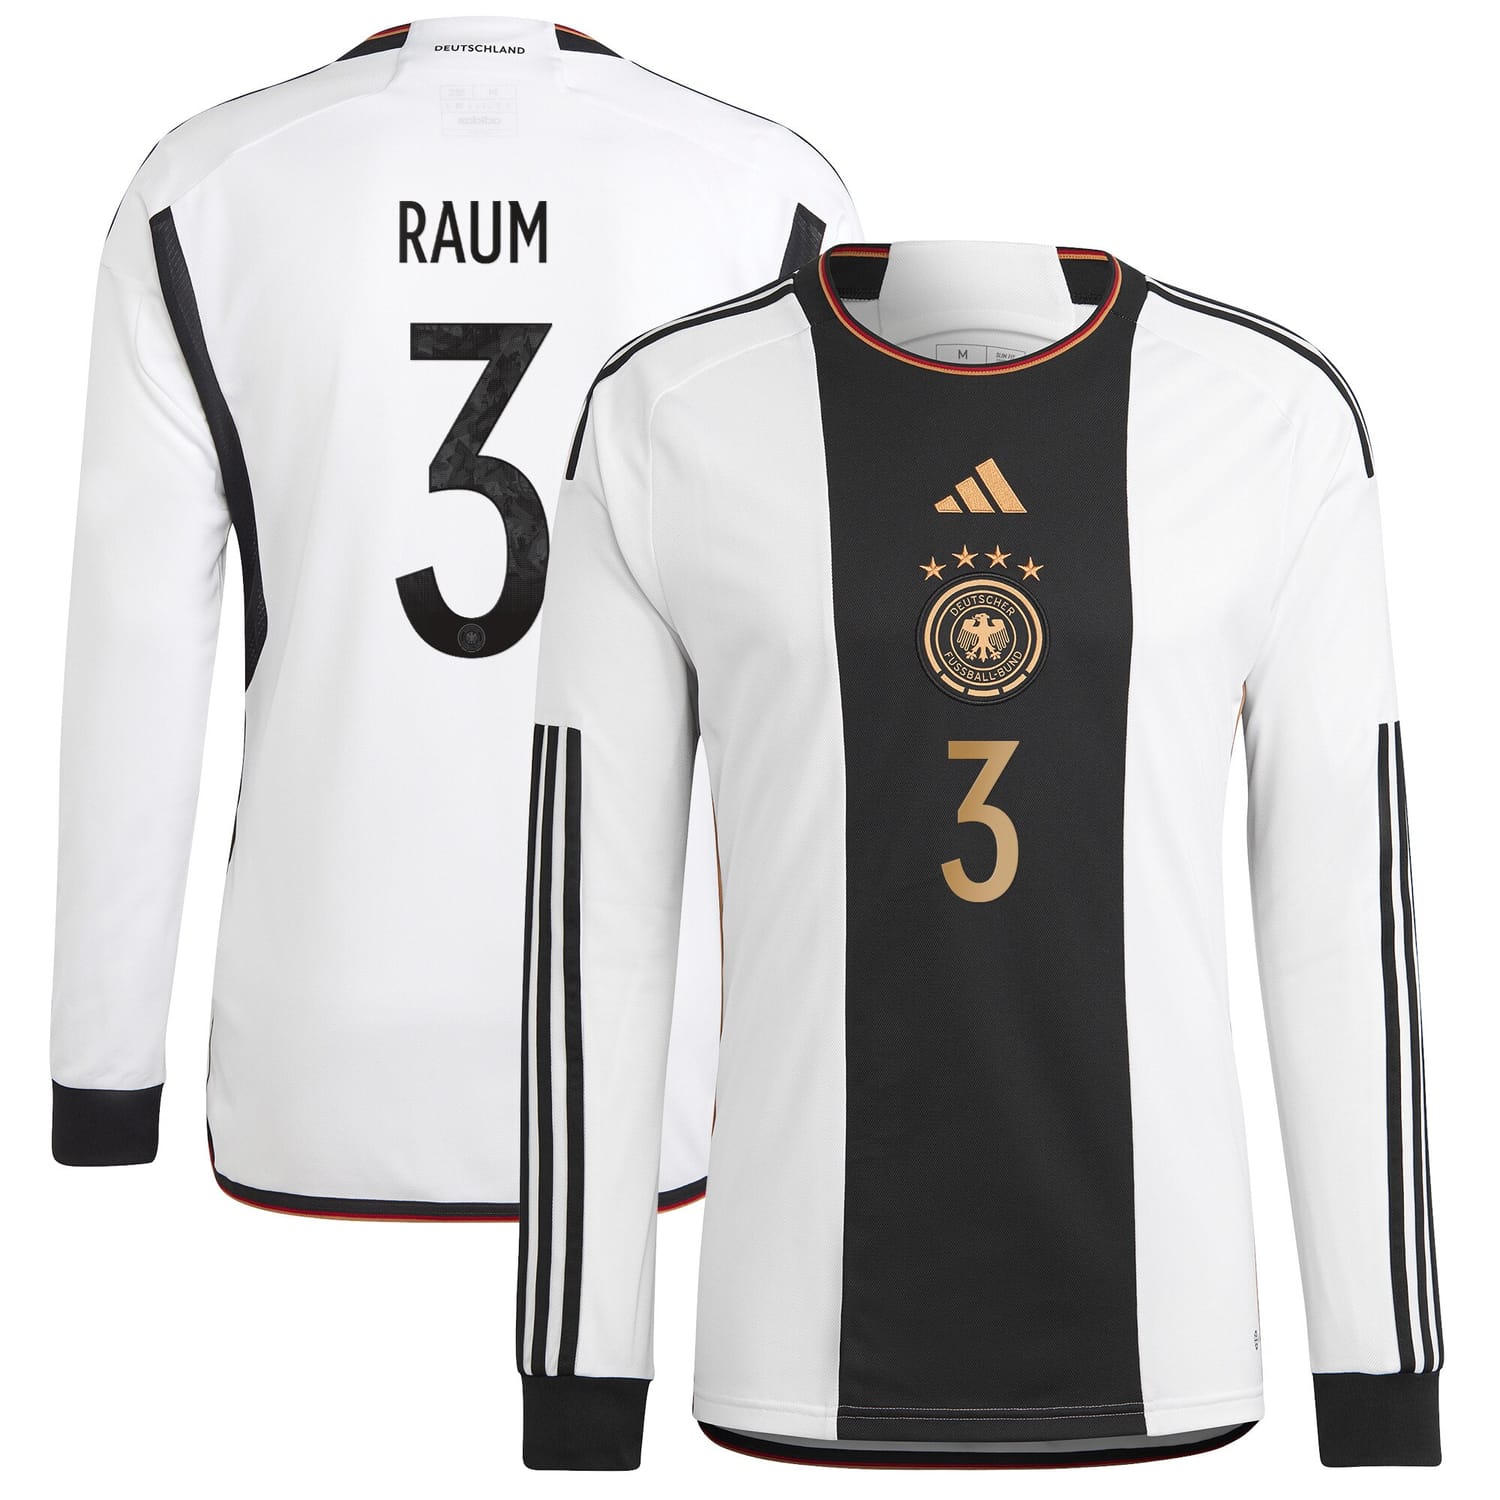 Germany National Team Home Jersey Shirt Long Sleeve player David Raum 3 printing for Men